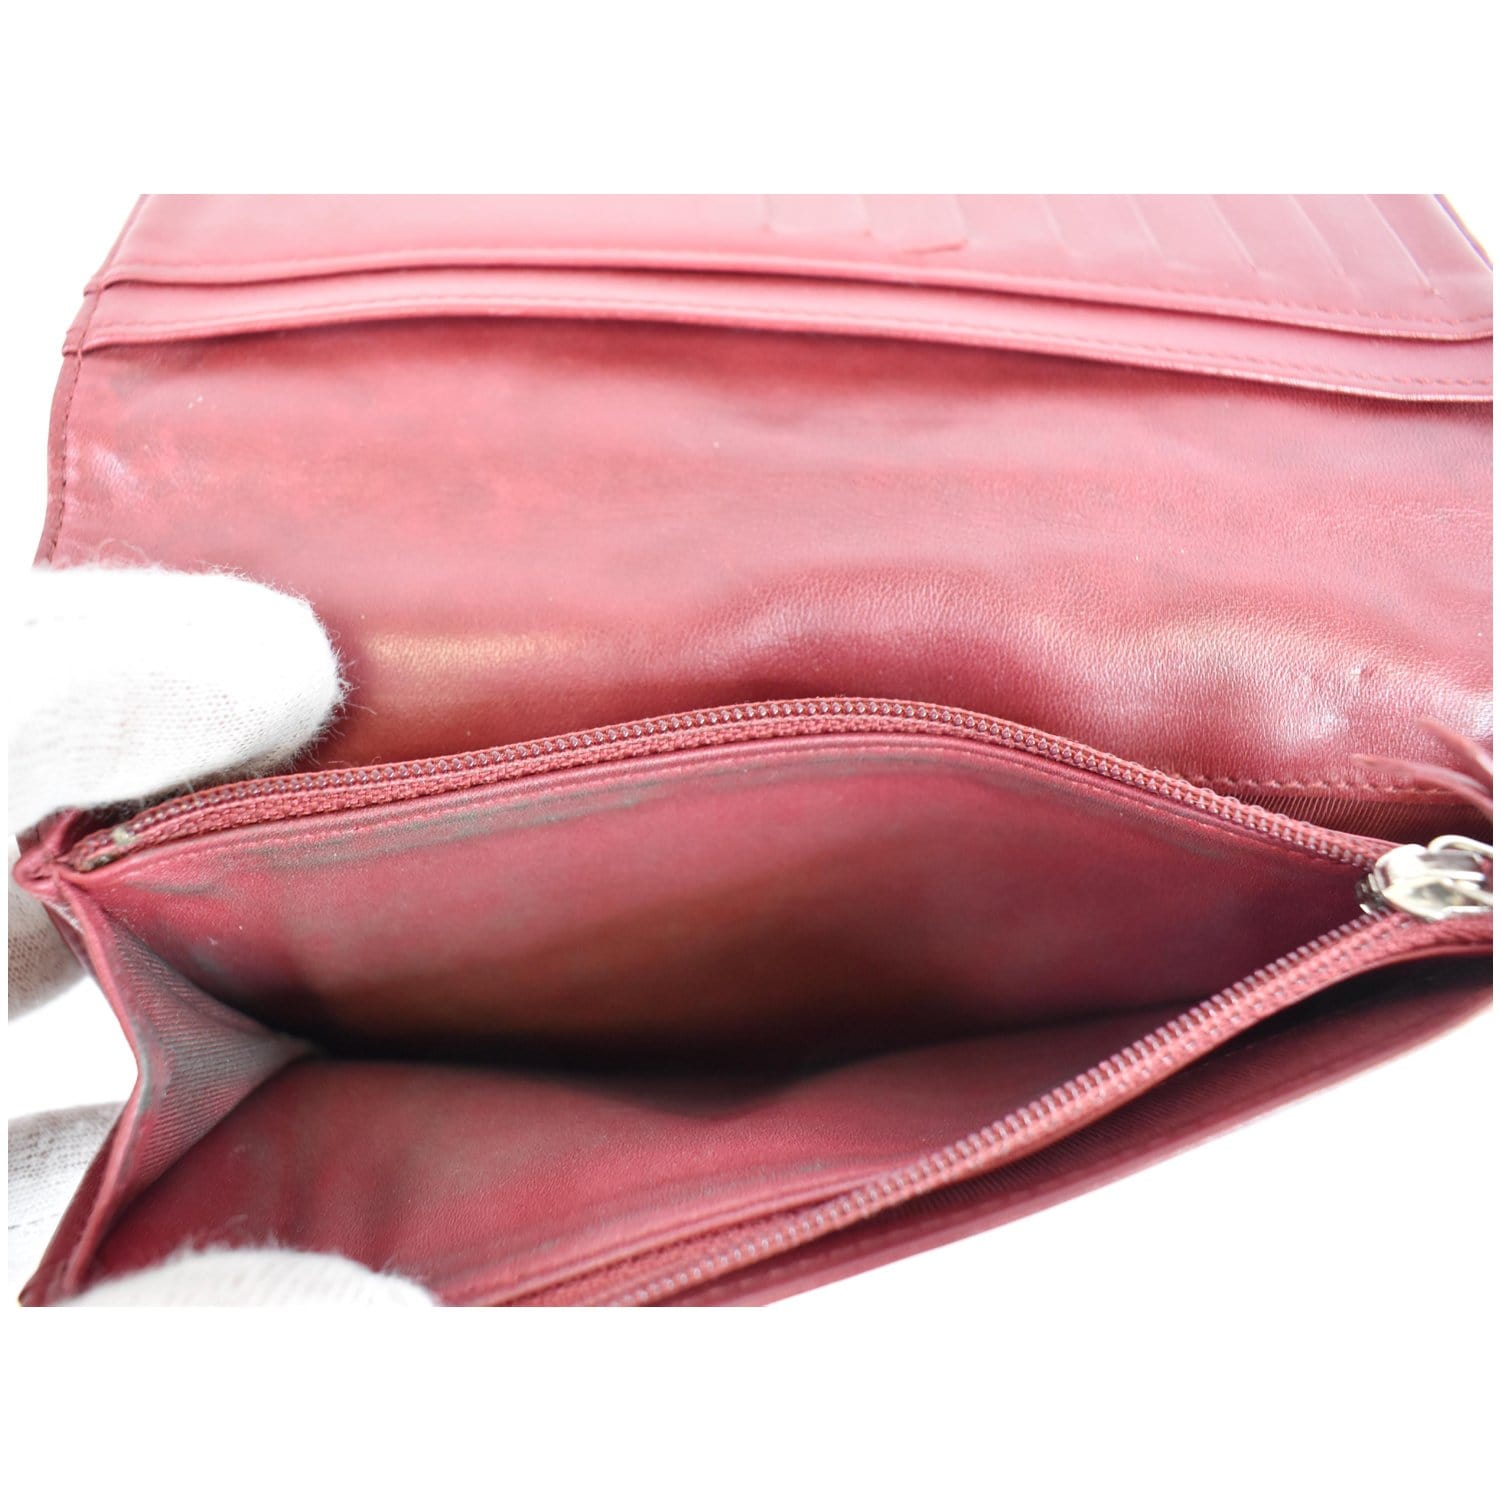 Red Chanel CC Matelasse Small Wallet – Designer Revival